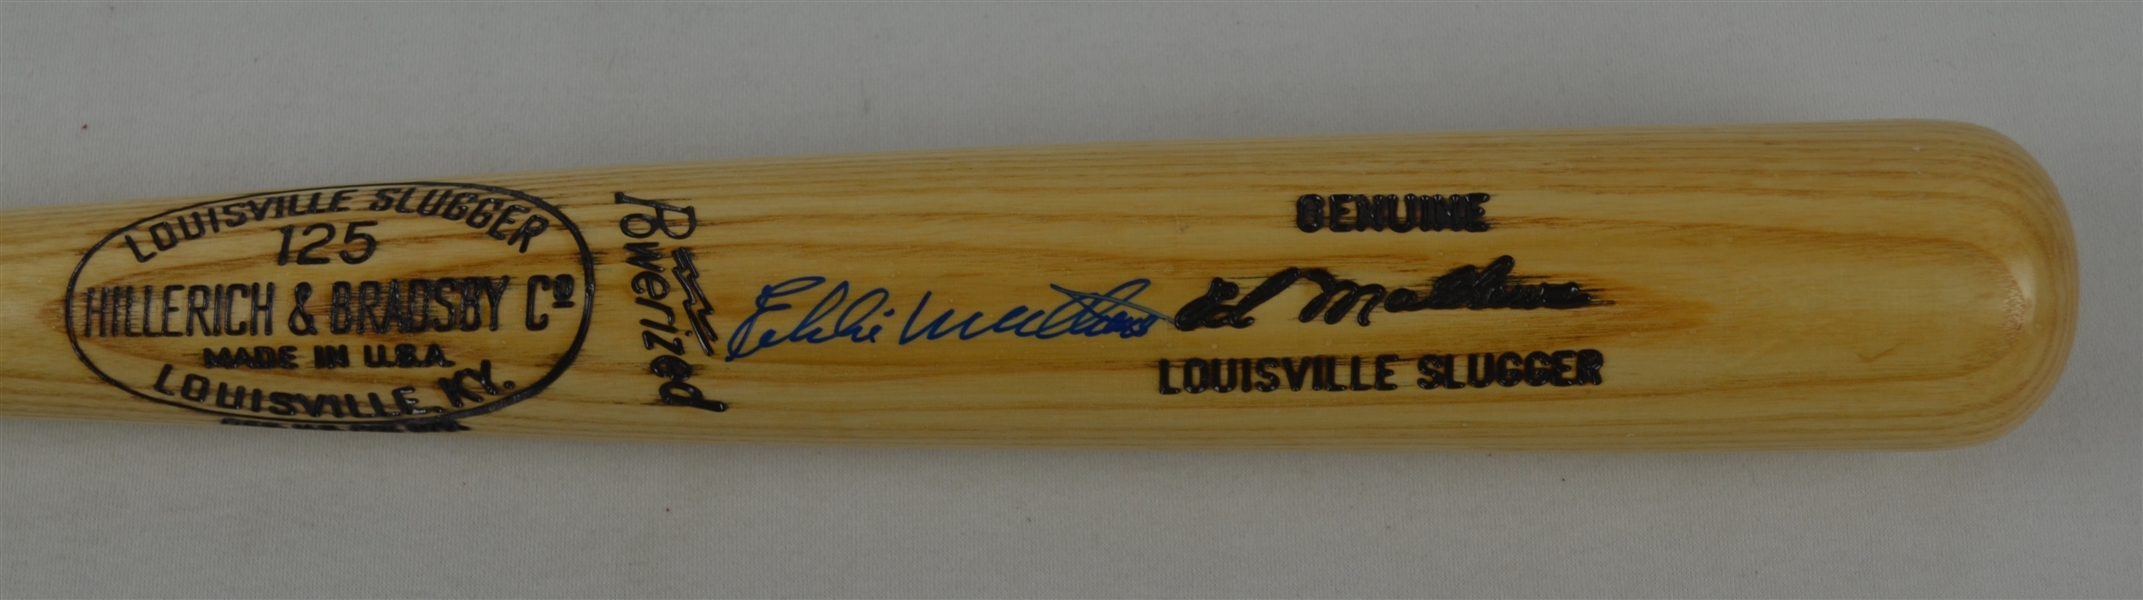 Eddie Mathews Autographed Signature Model Louisville Slugger Bat